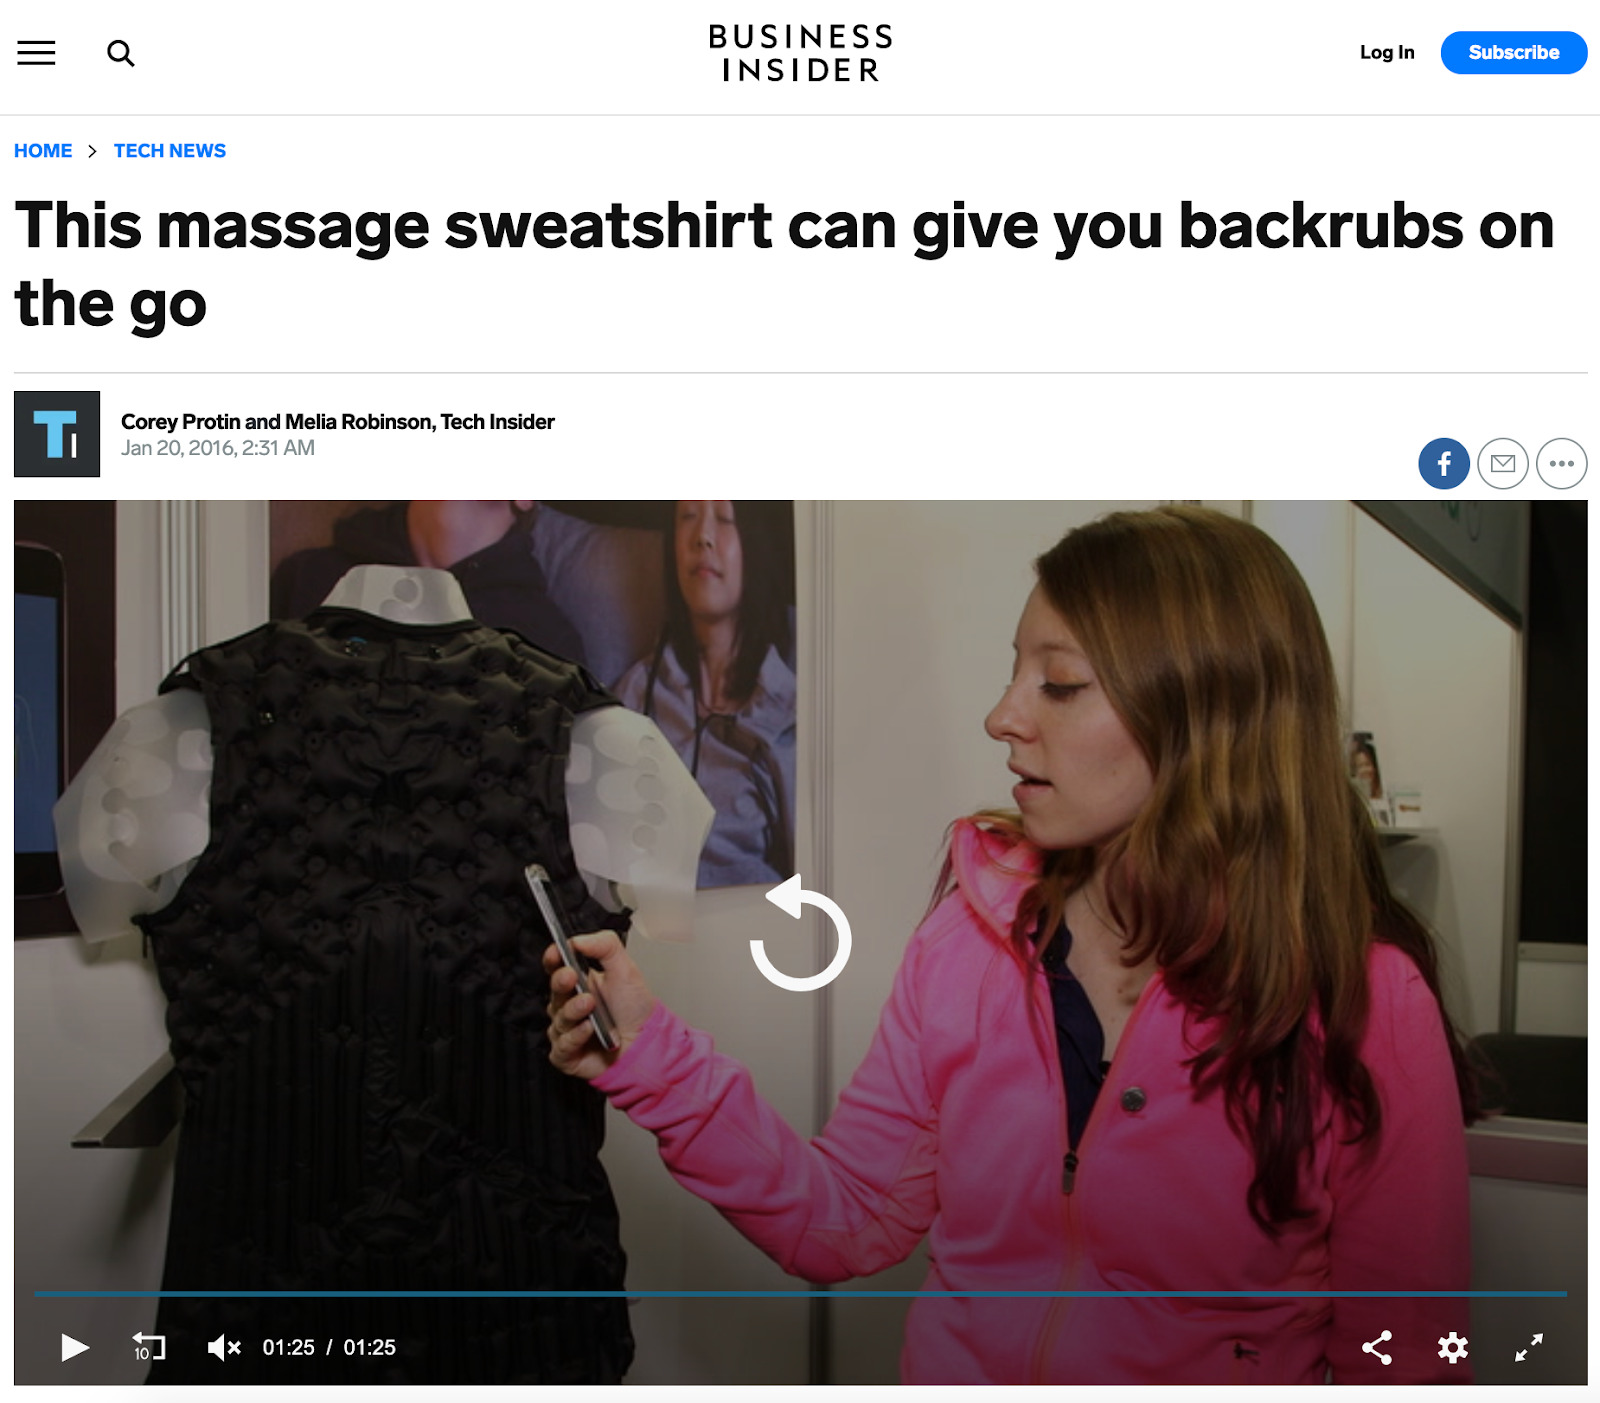 TWare massage sweatshirt gives backrubs Business Insider